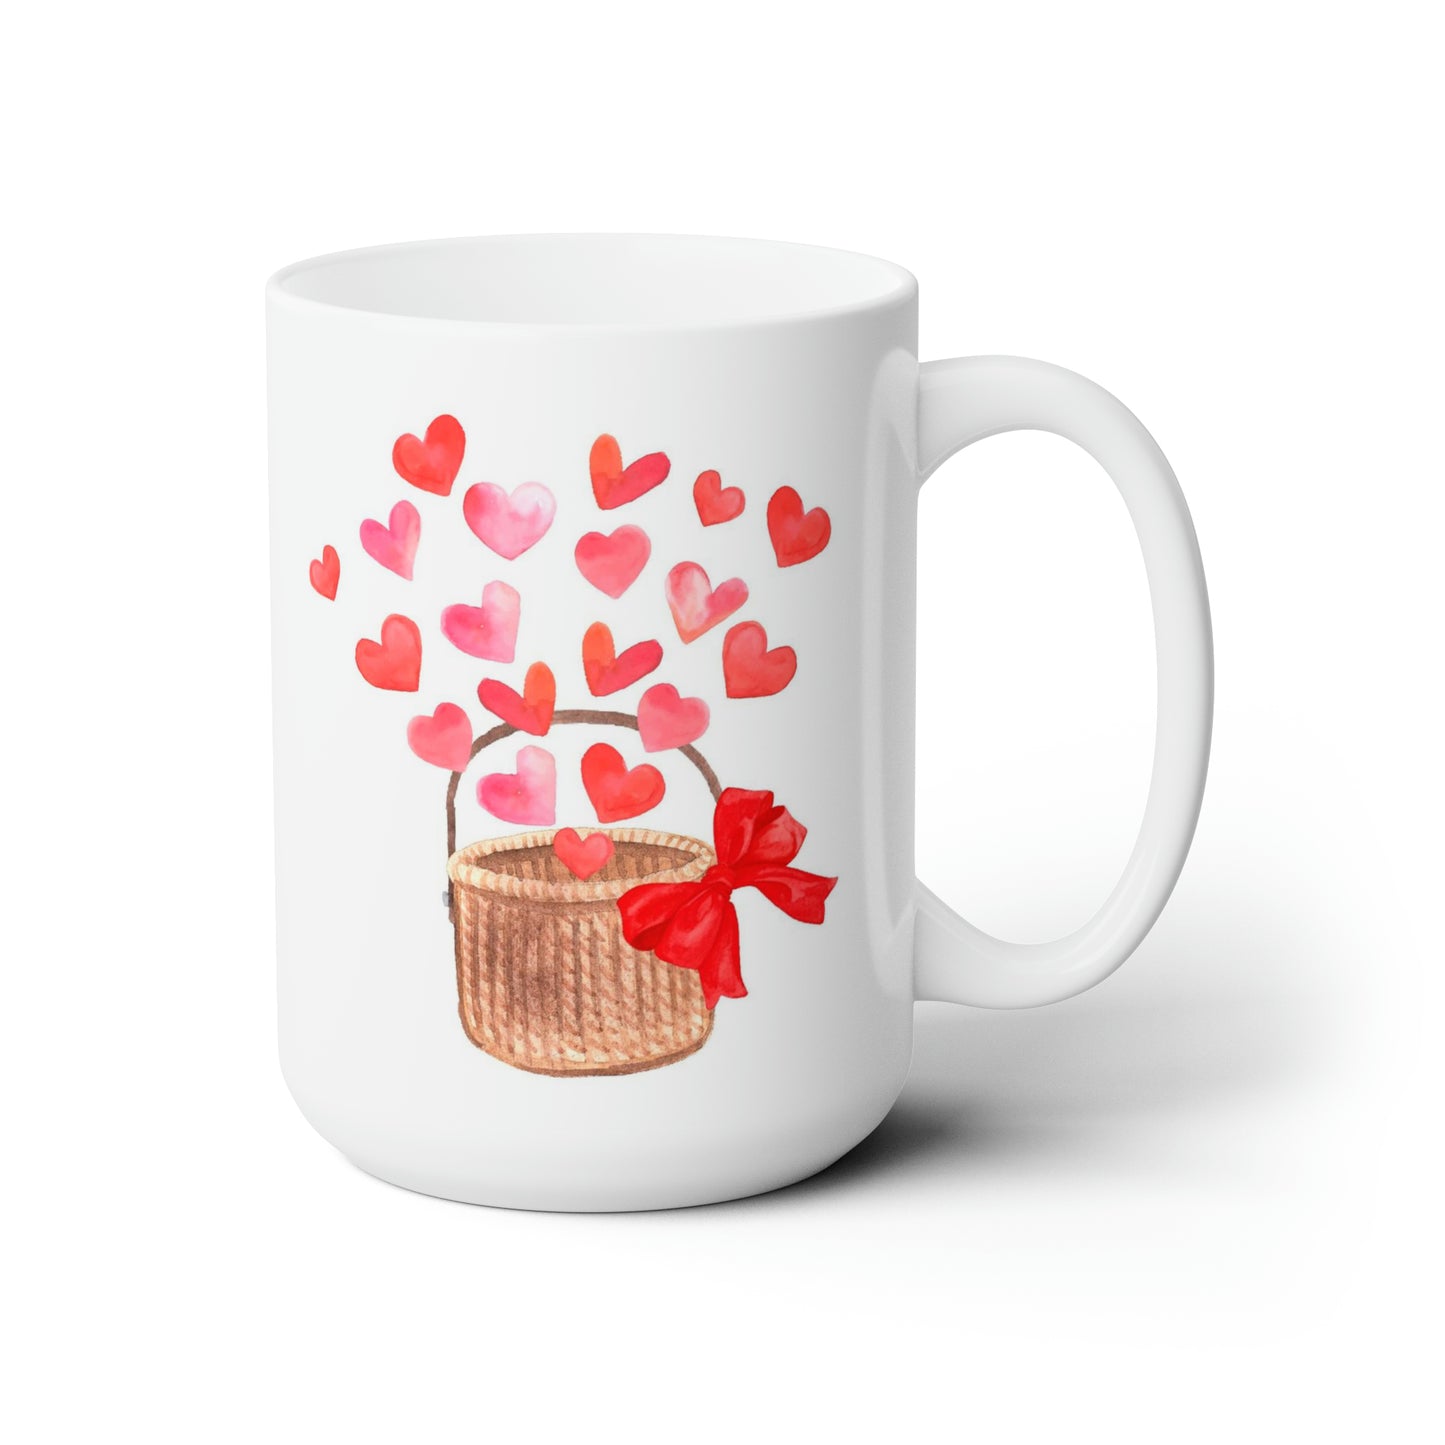 Basket of Hearts Ceramic Mug